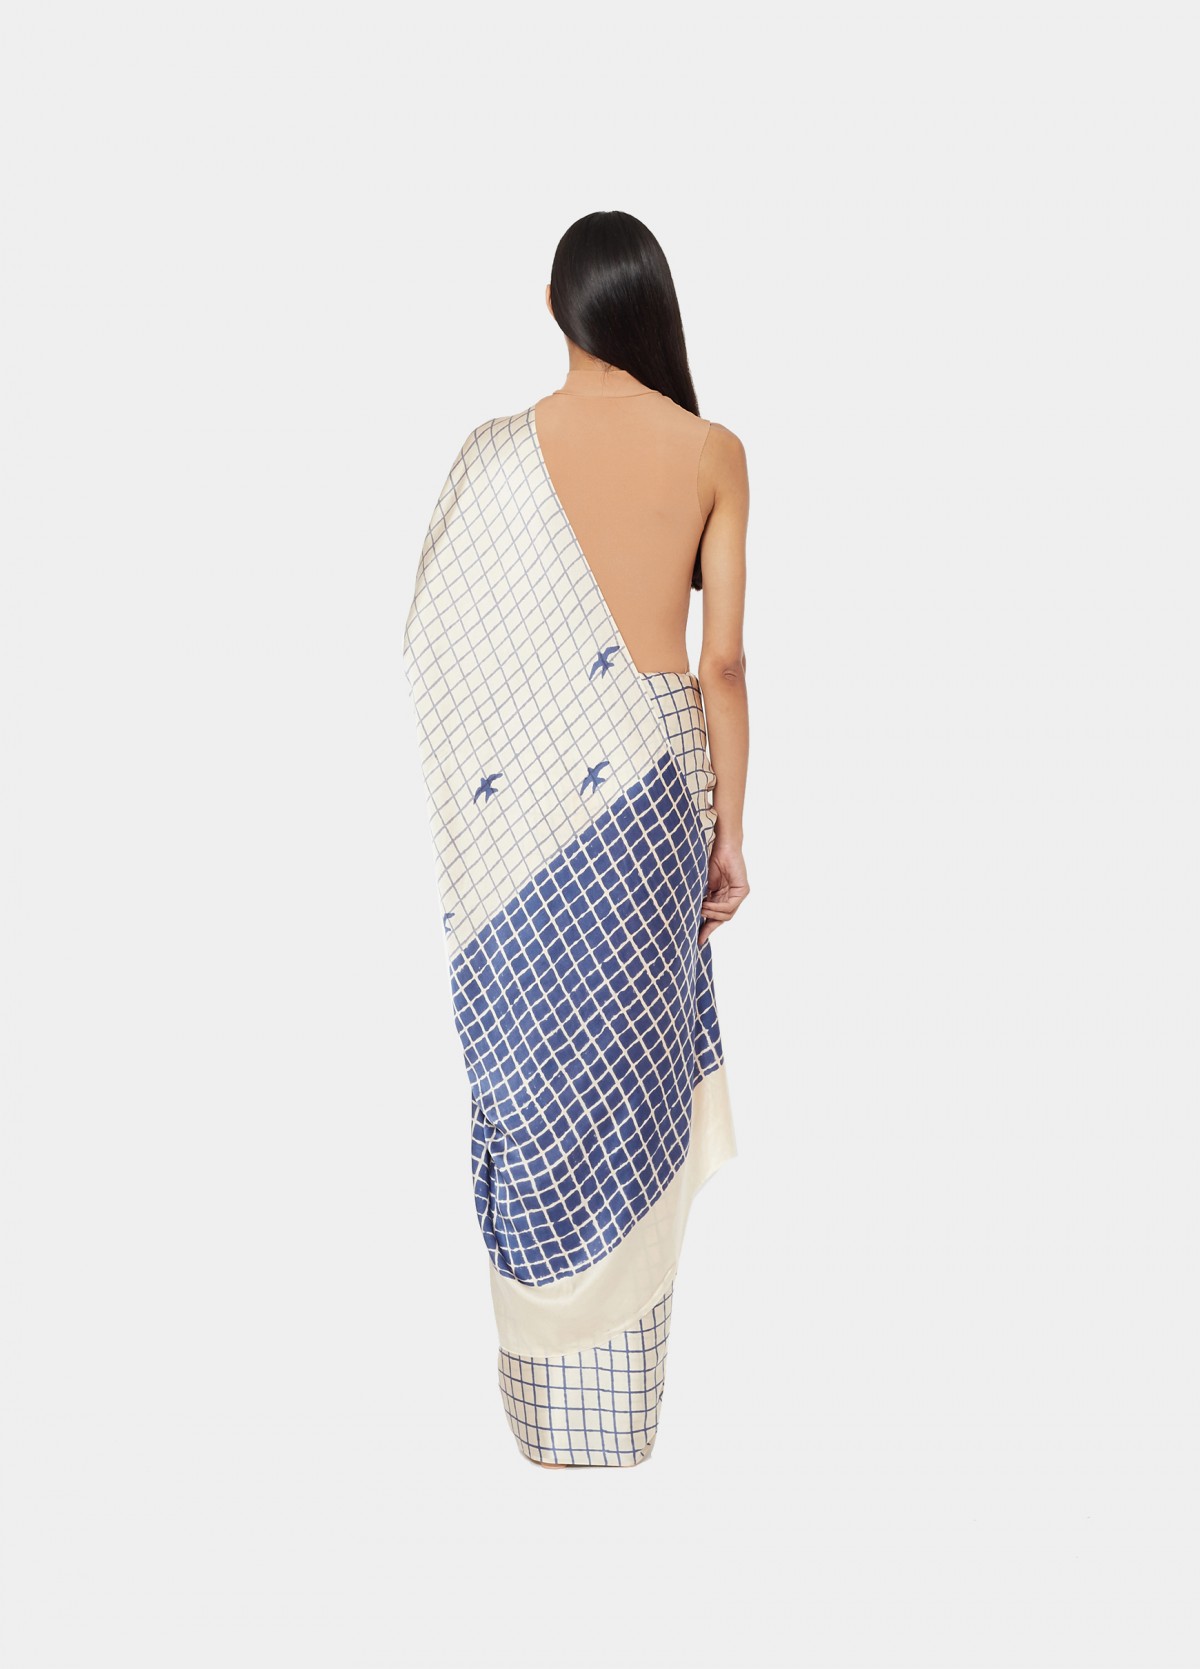  The Chaupad Sari